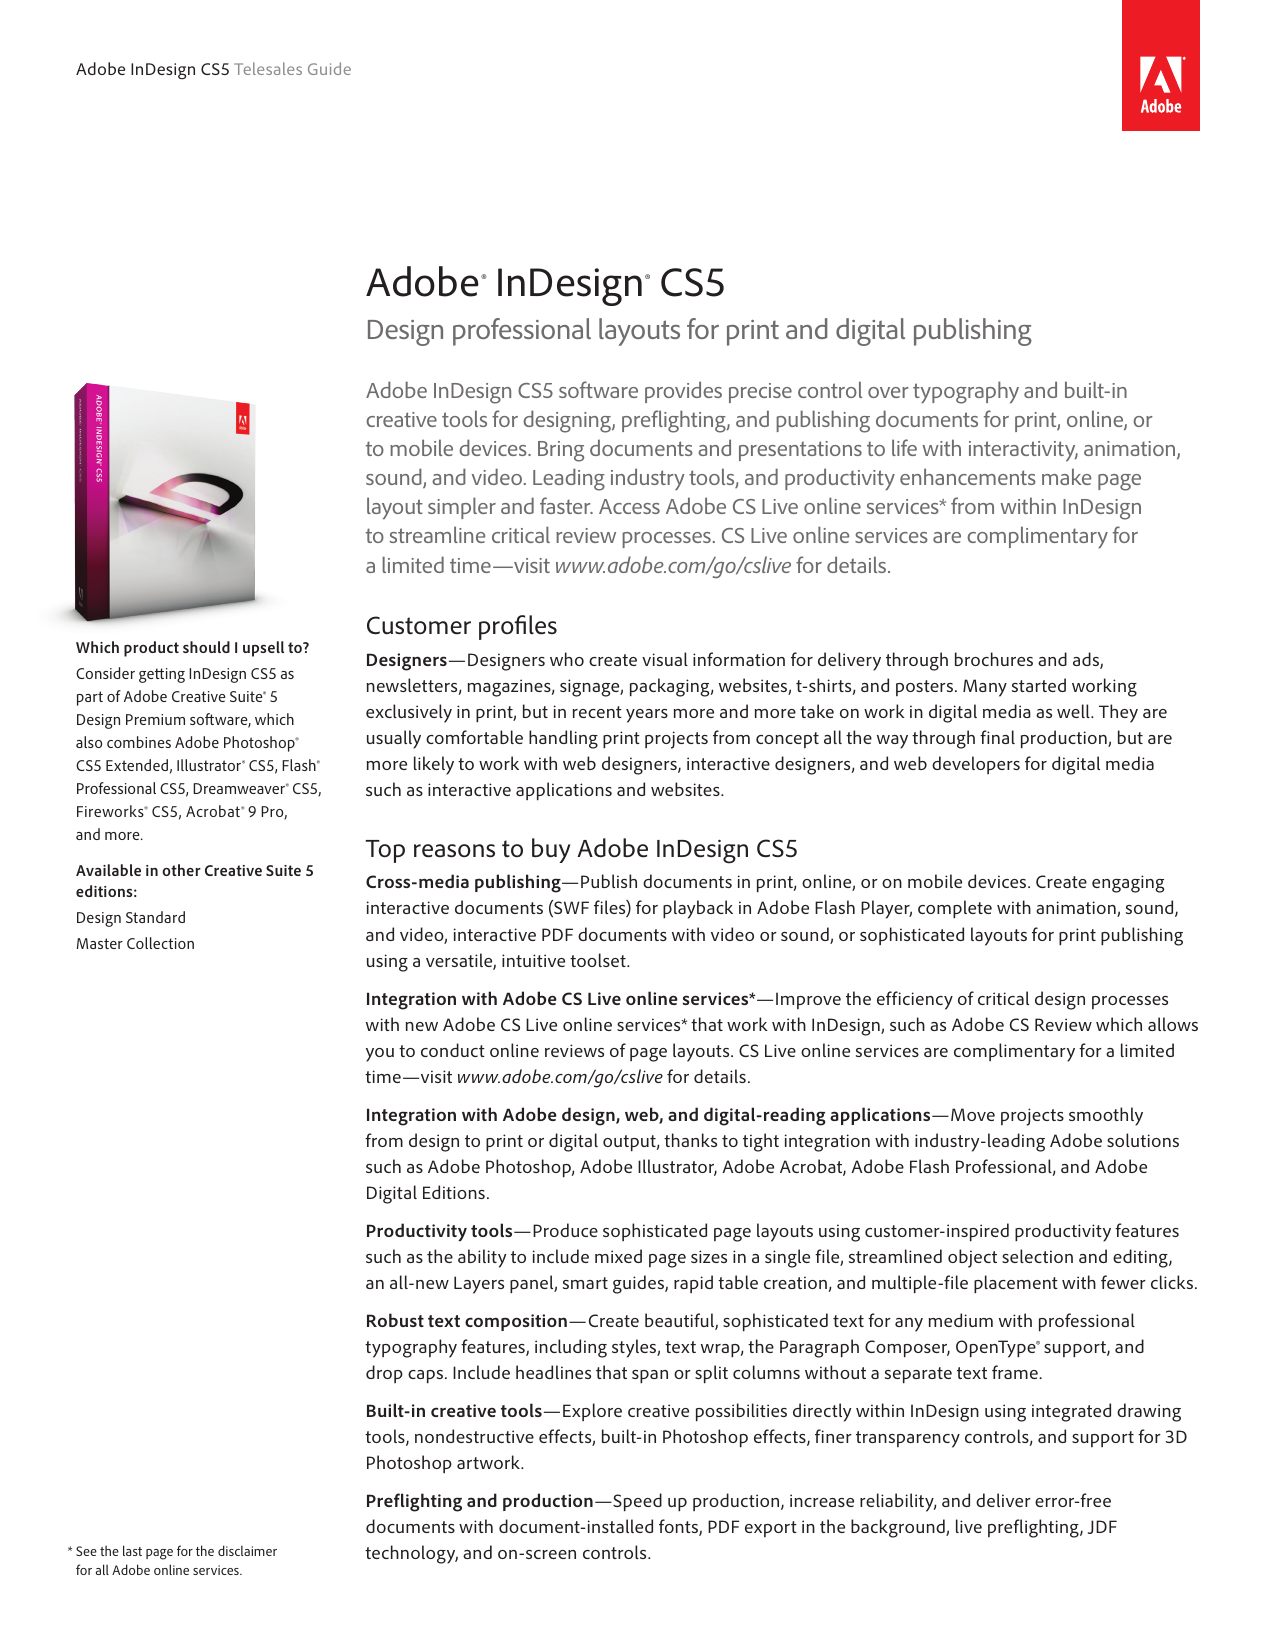 adobe photoshop 5.5 review